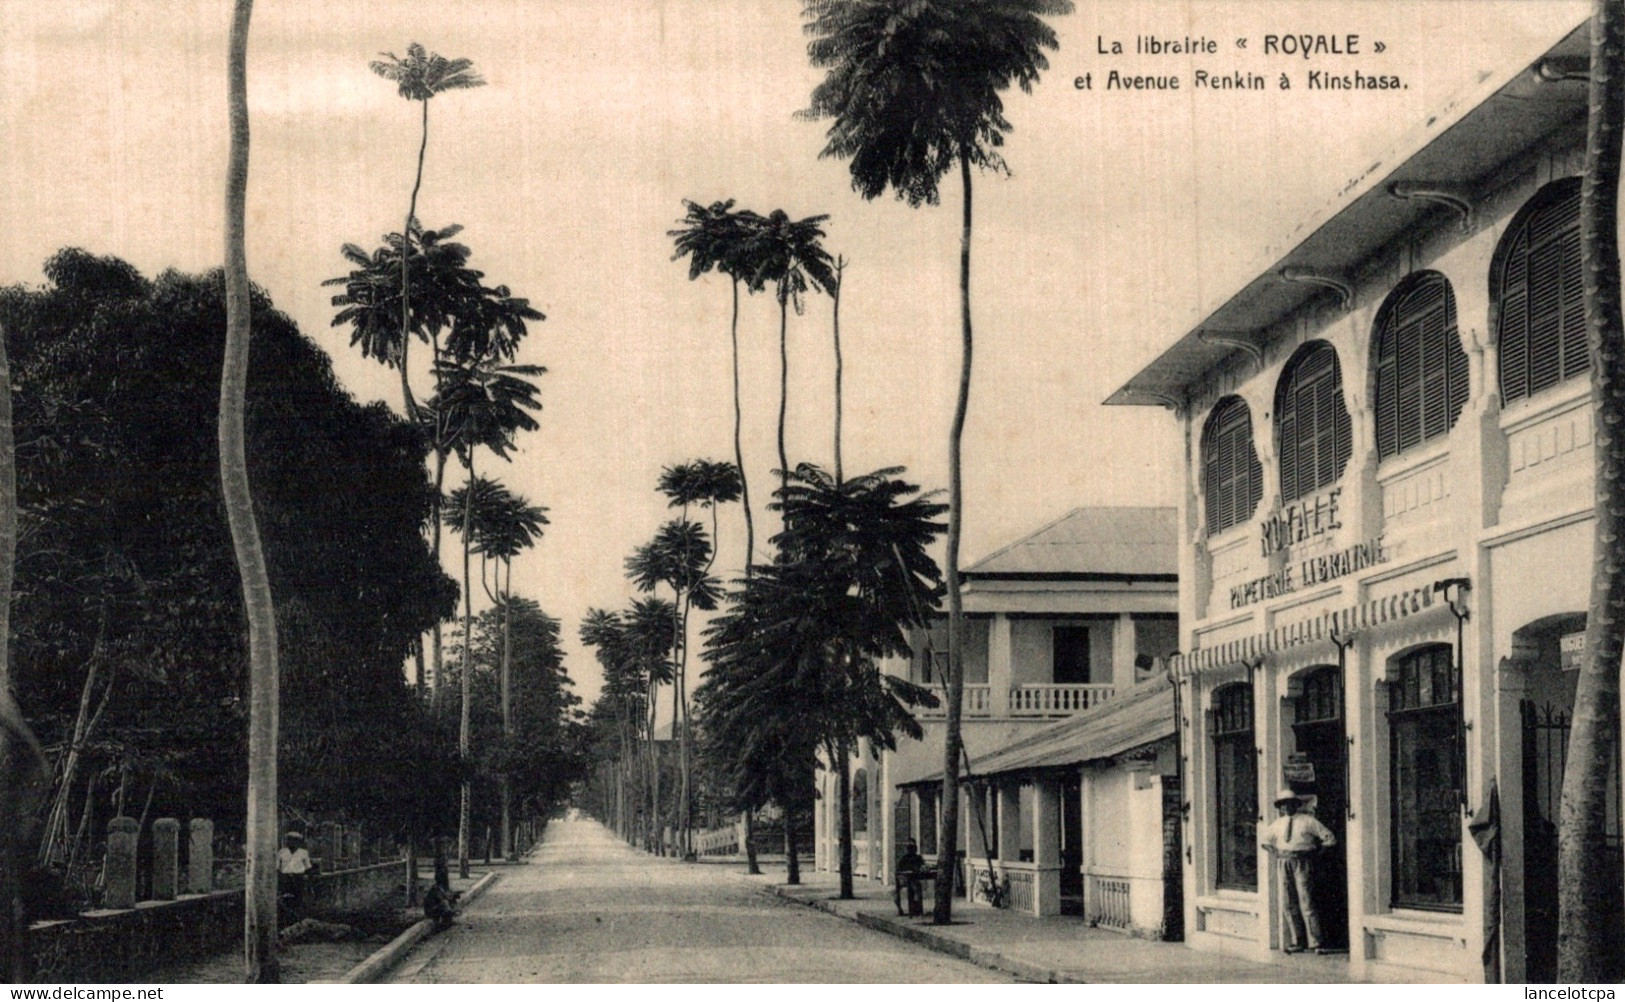 KINSHASA / LA LIBRAIRIE ROYALE ET AVENUE RENKIN - Kinshasa - Léopoldville